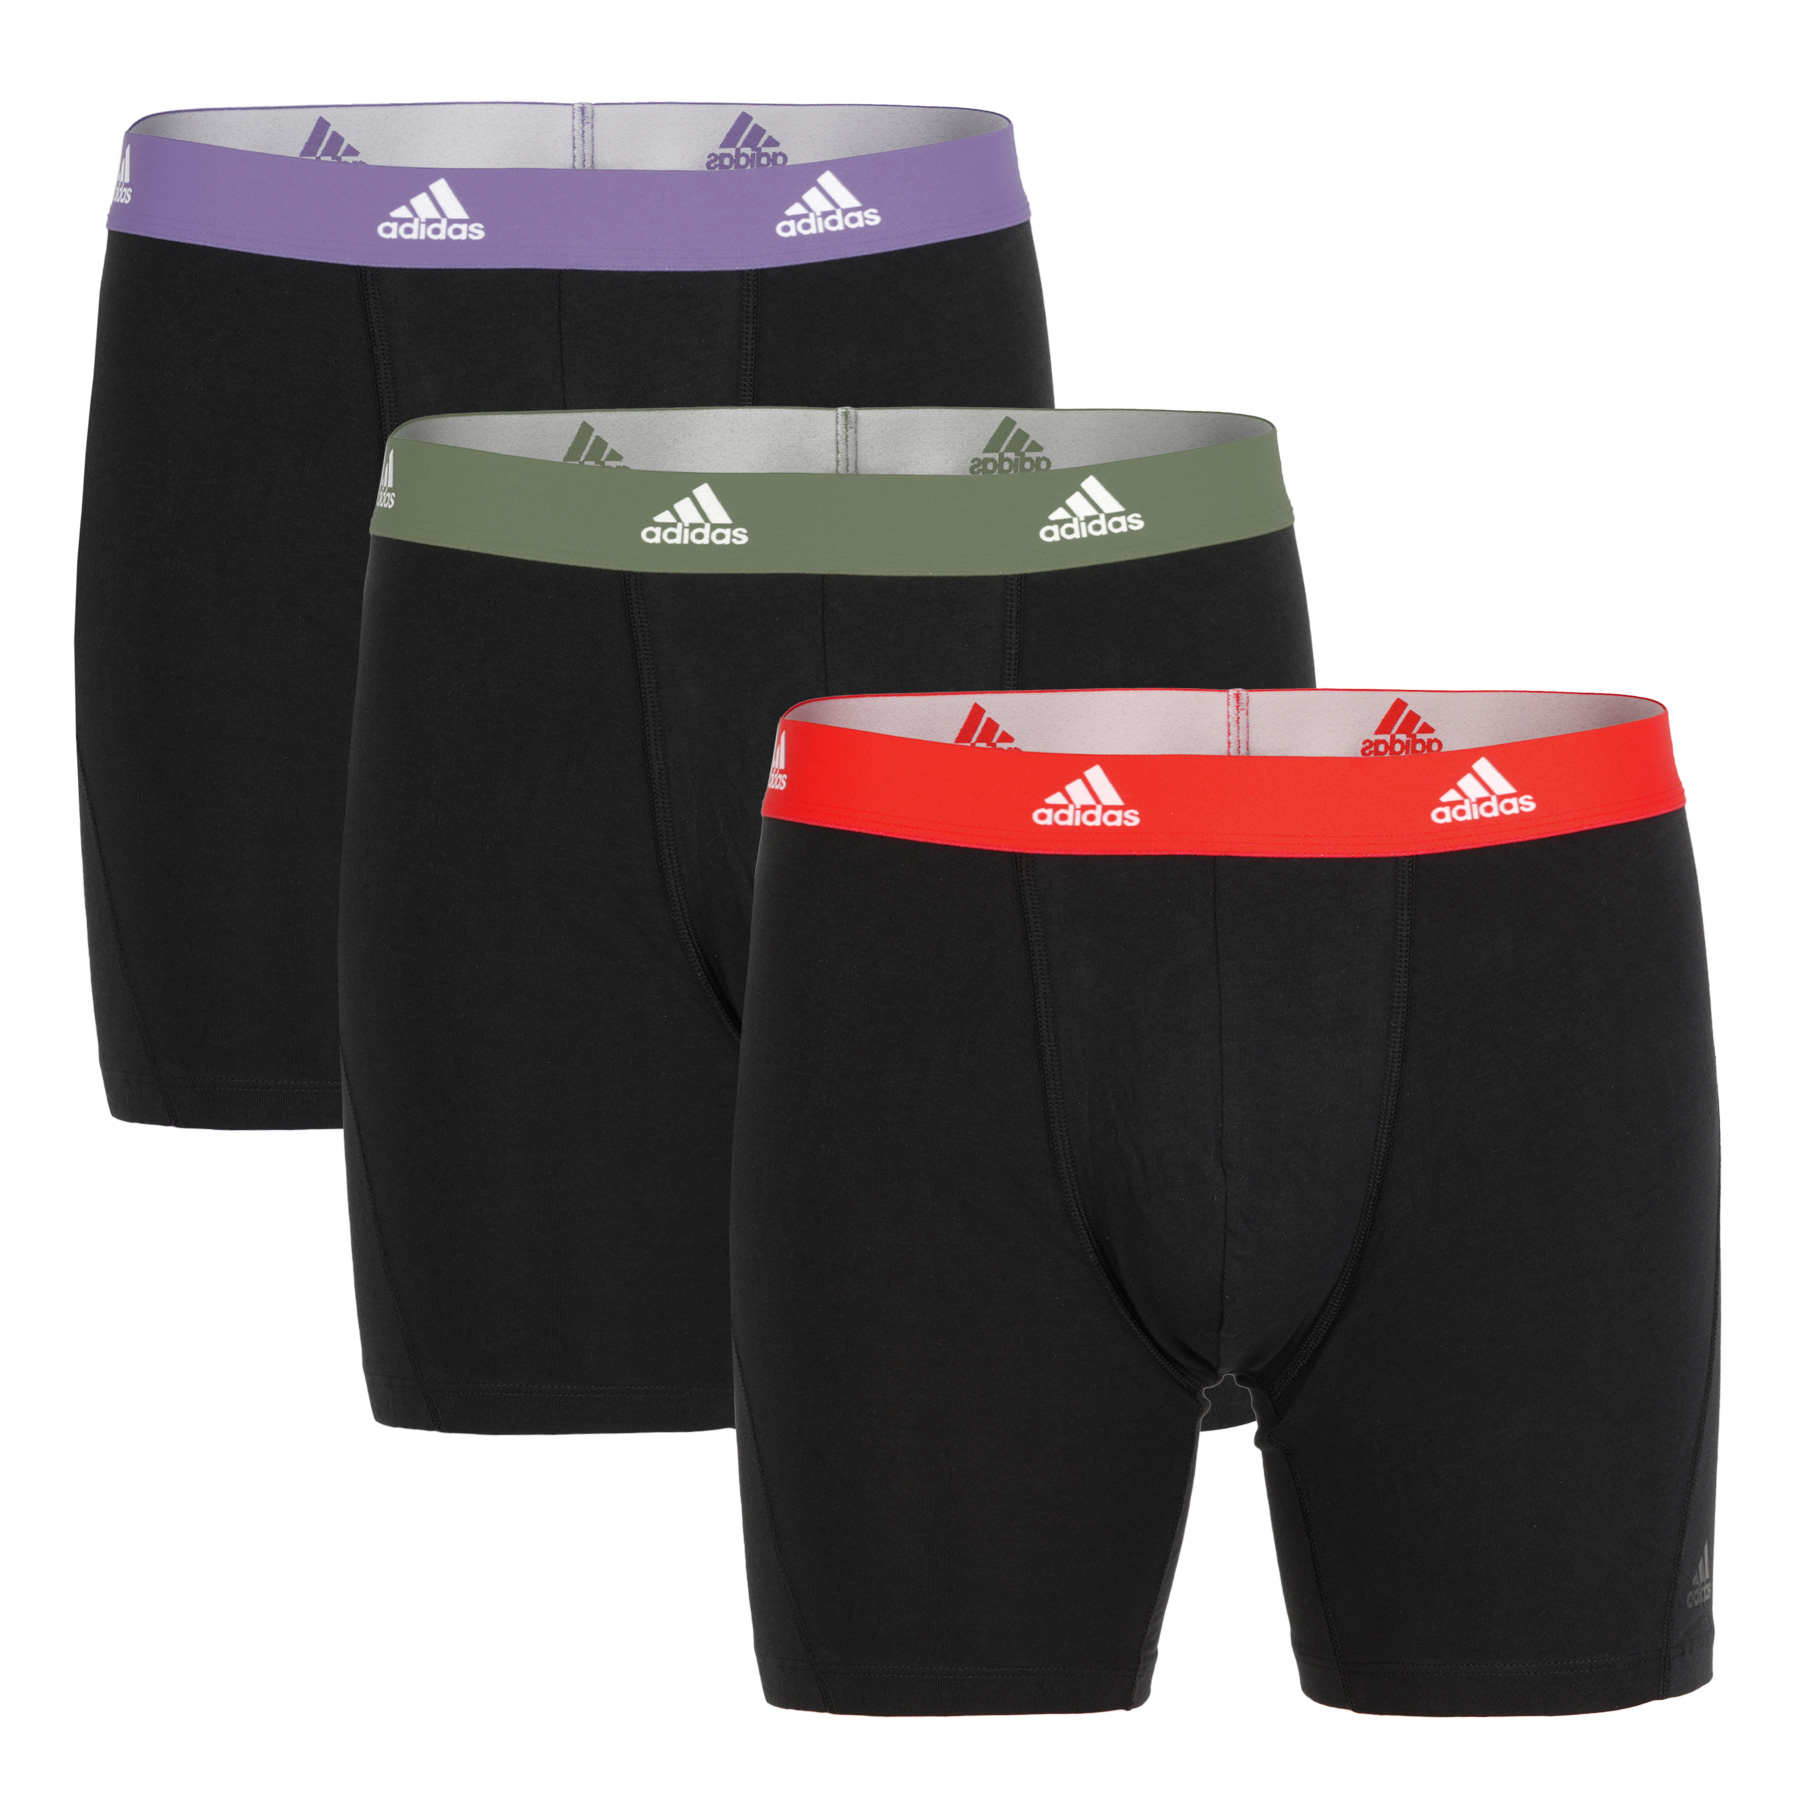 Picture of adidas Sports Underwear Active Flex Cotton Boxer Brief Men - 3 Pack - 079-black/multicolor